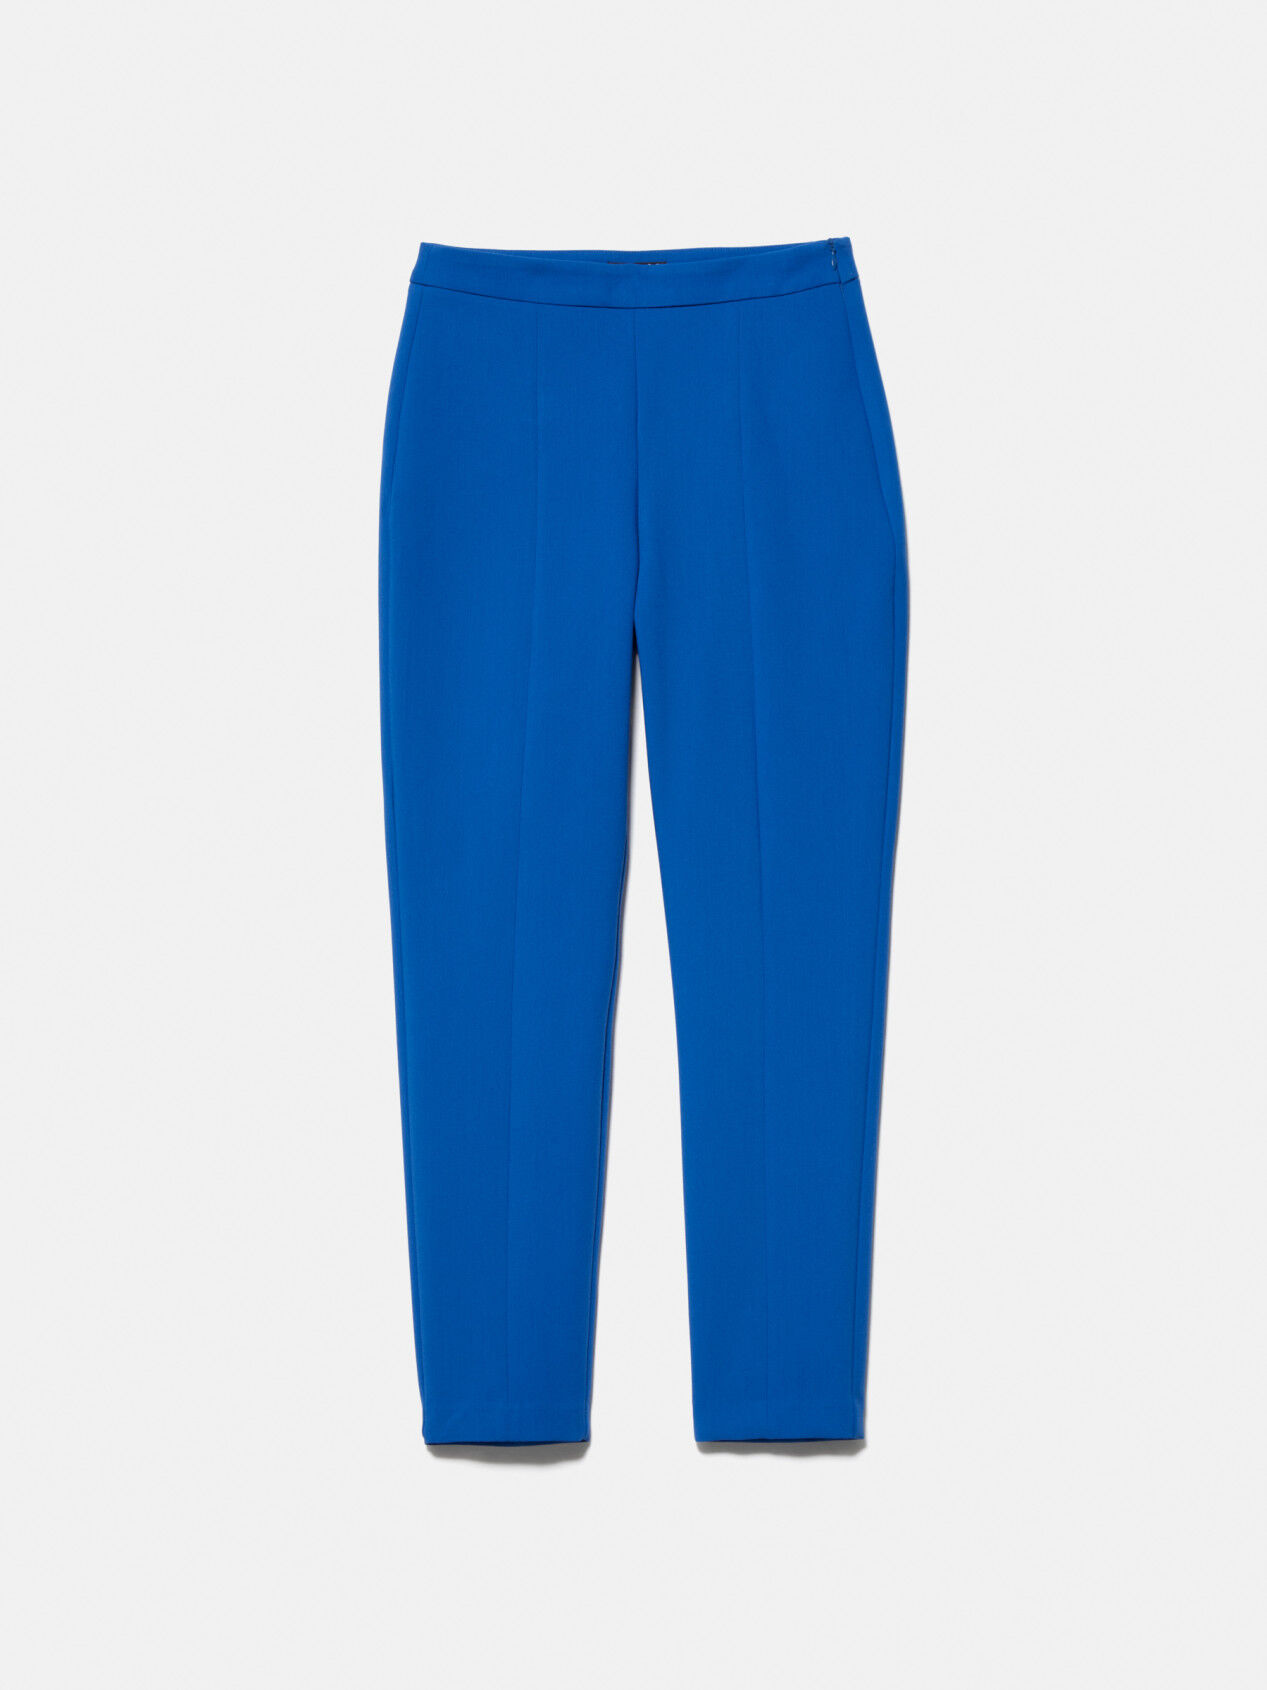 Women's Cheap Blue Trousers | Navy, Cobalt & Royal Blue | bonprix